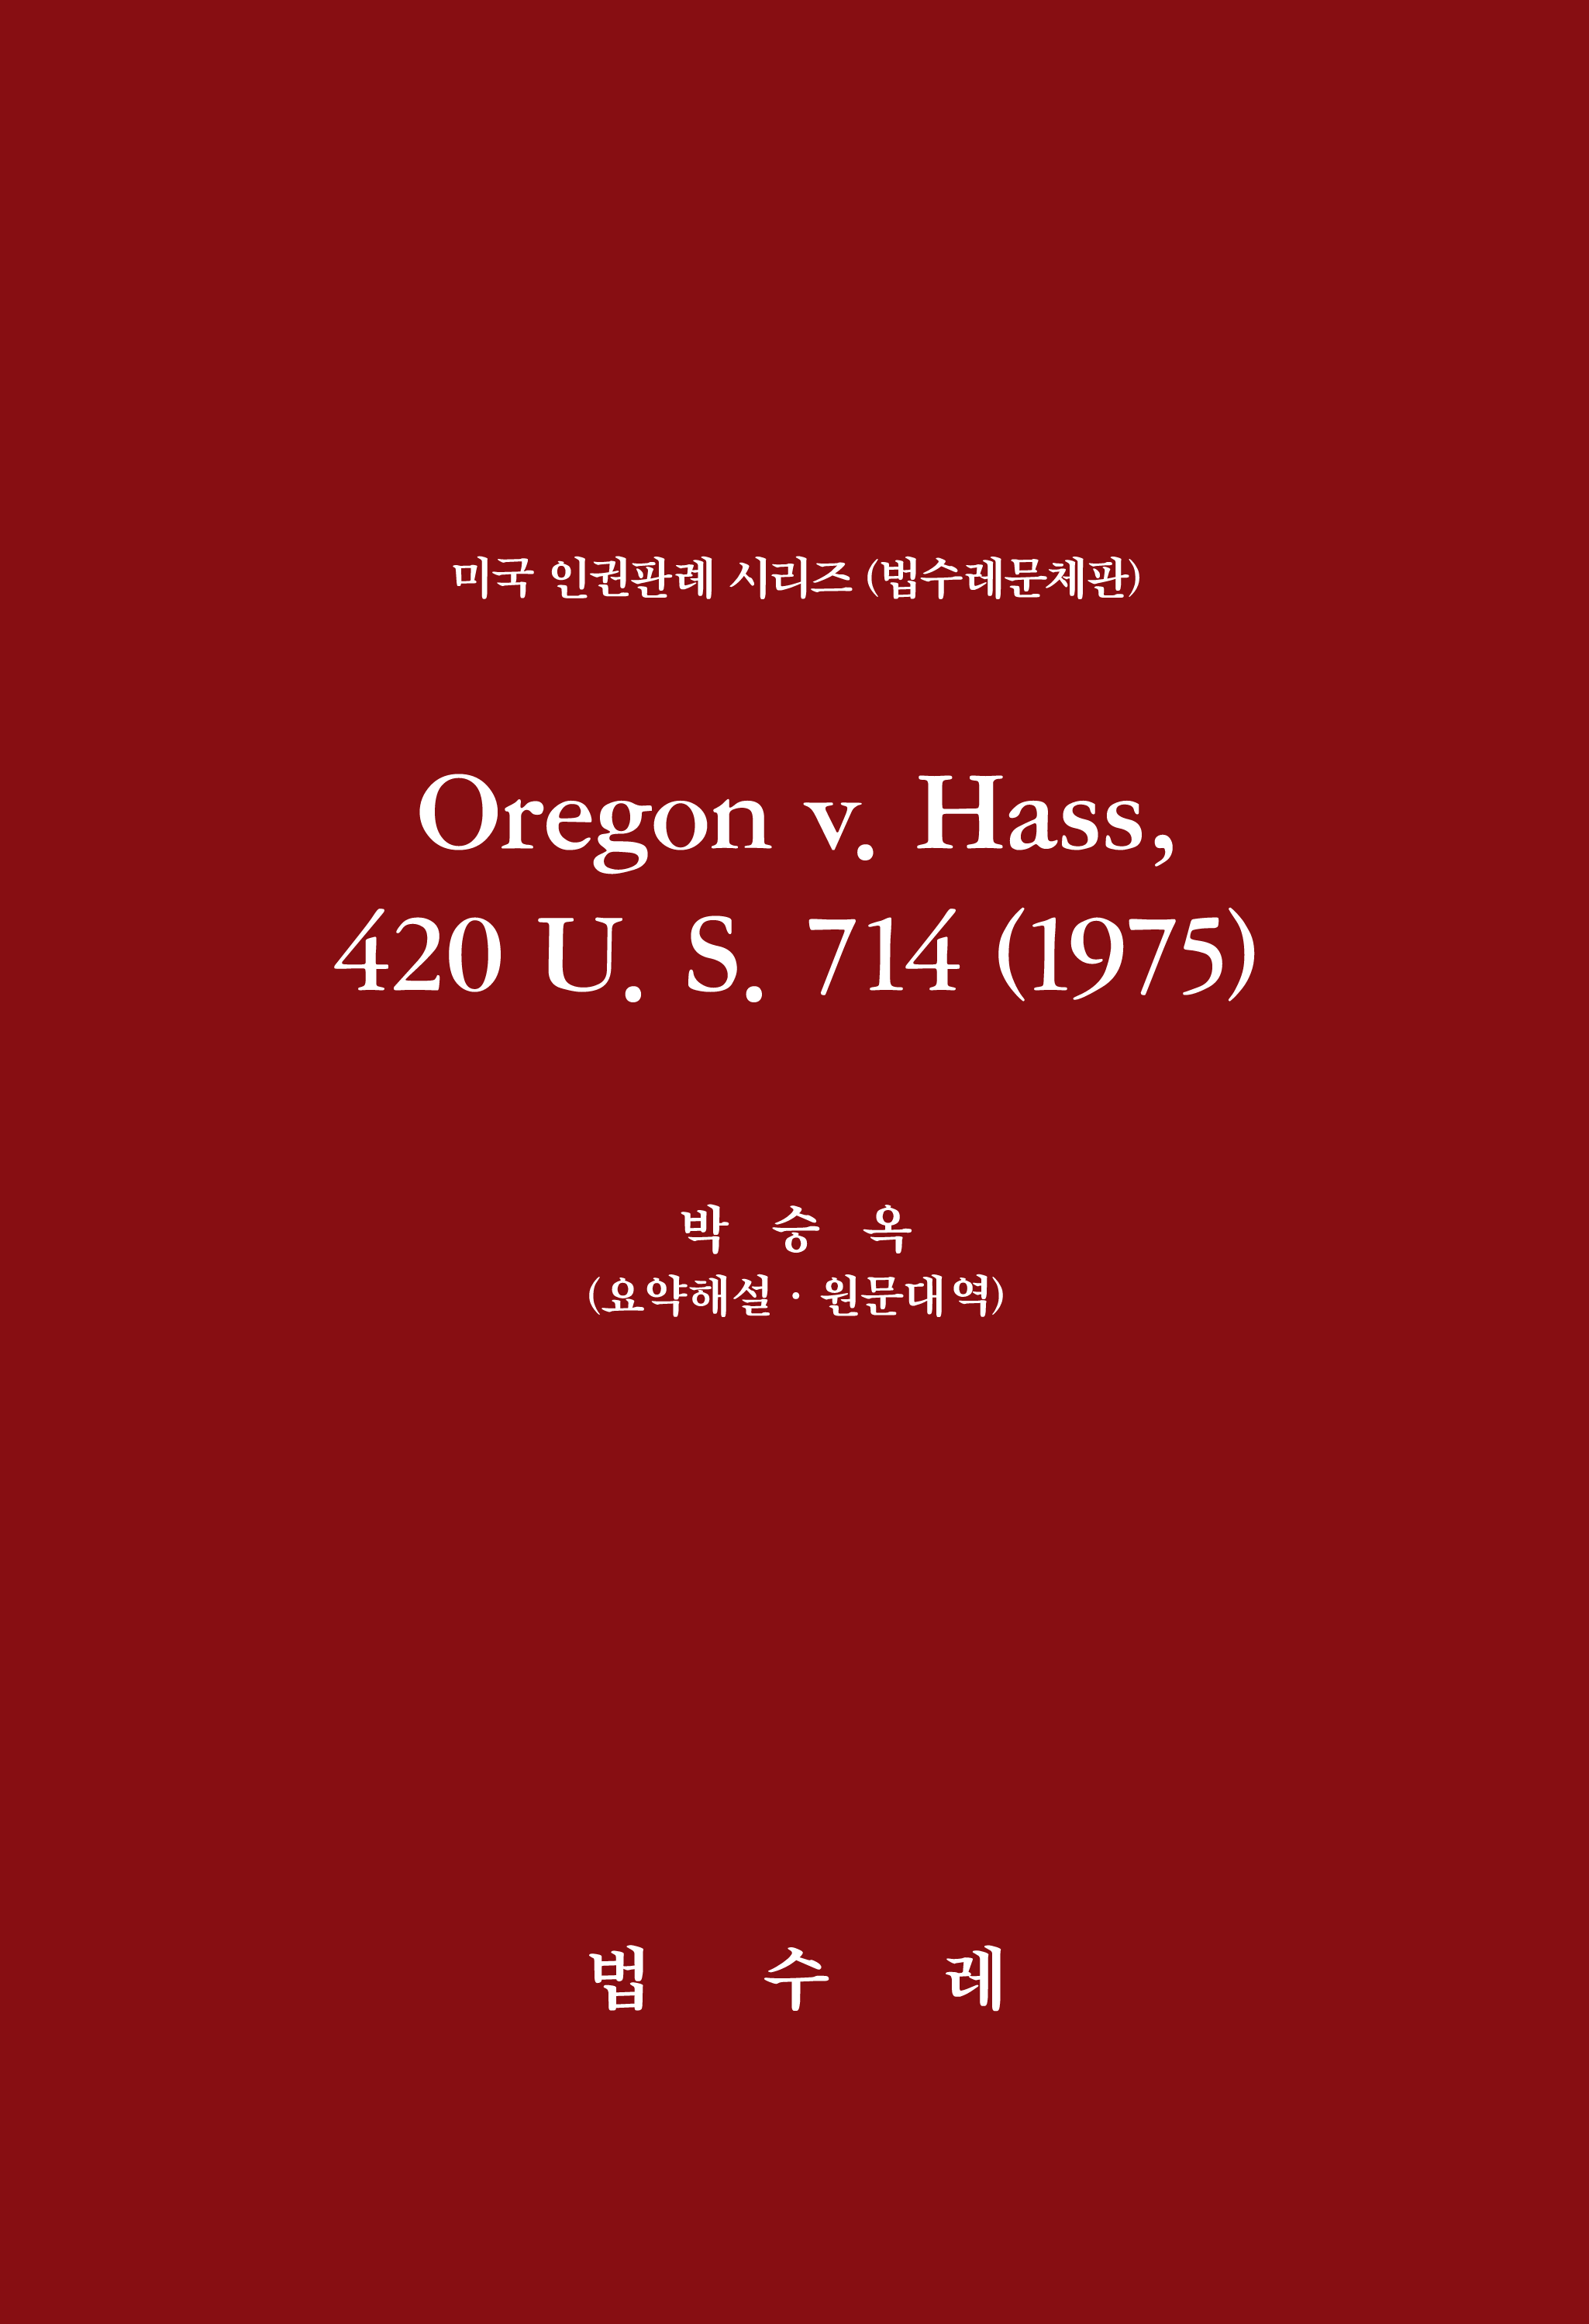 Oregon v. Hass, 420 U. S. 714 (1975)